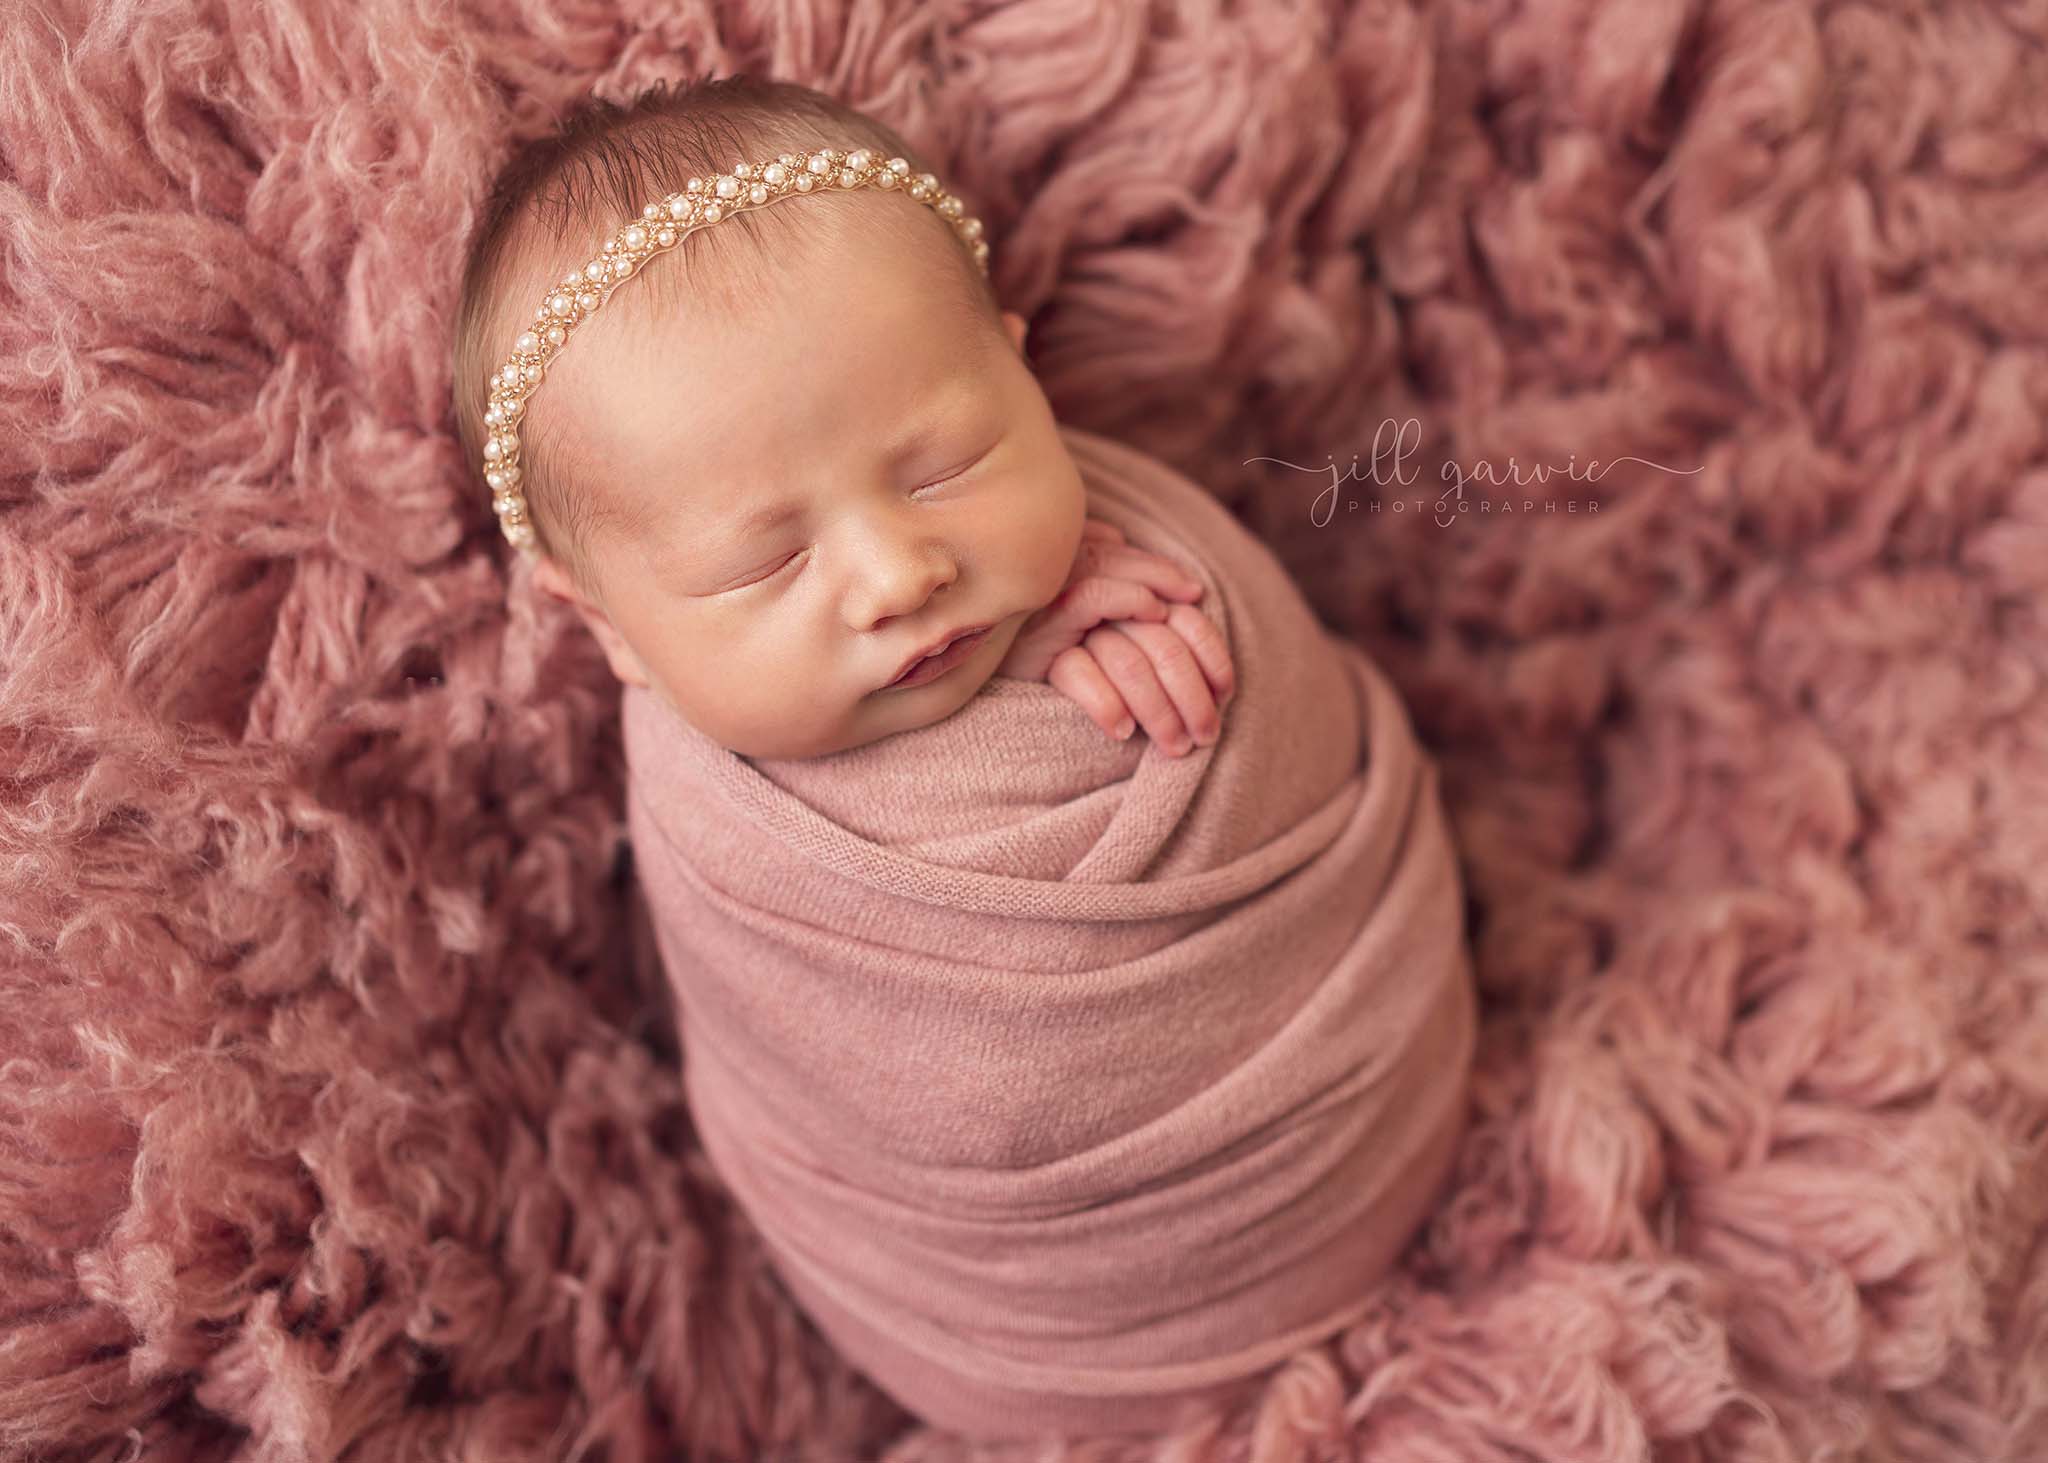 Photograph of Newborn baby taken at Jill Garvie Photography studio in Edinburgh